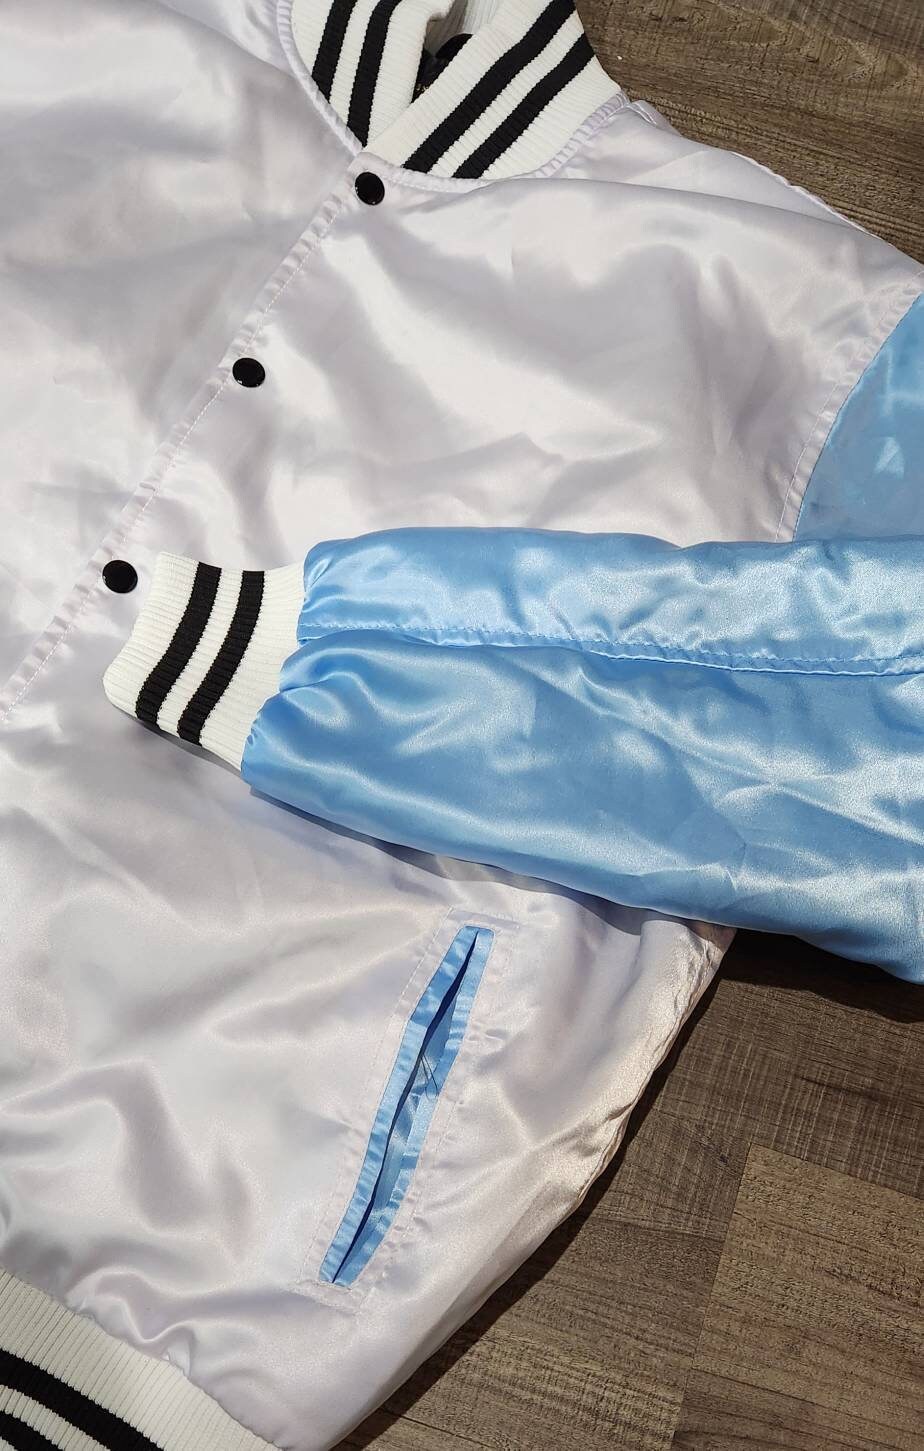 Limited Edition: Satin, Carolina Blue Arms, White Body, Blk Stripes, Varsity Jacket with Ribbed Cuffs, Interior Zipper, Starter Sport Jacket